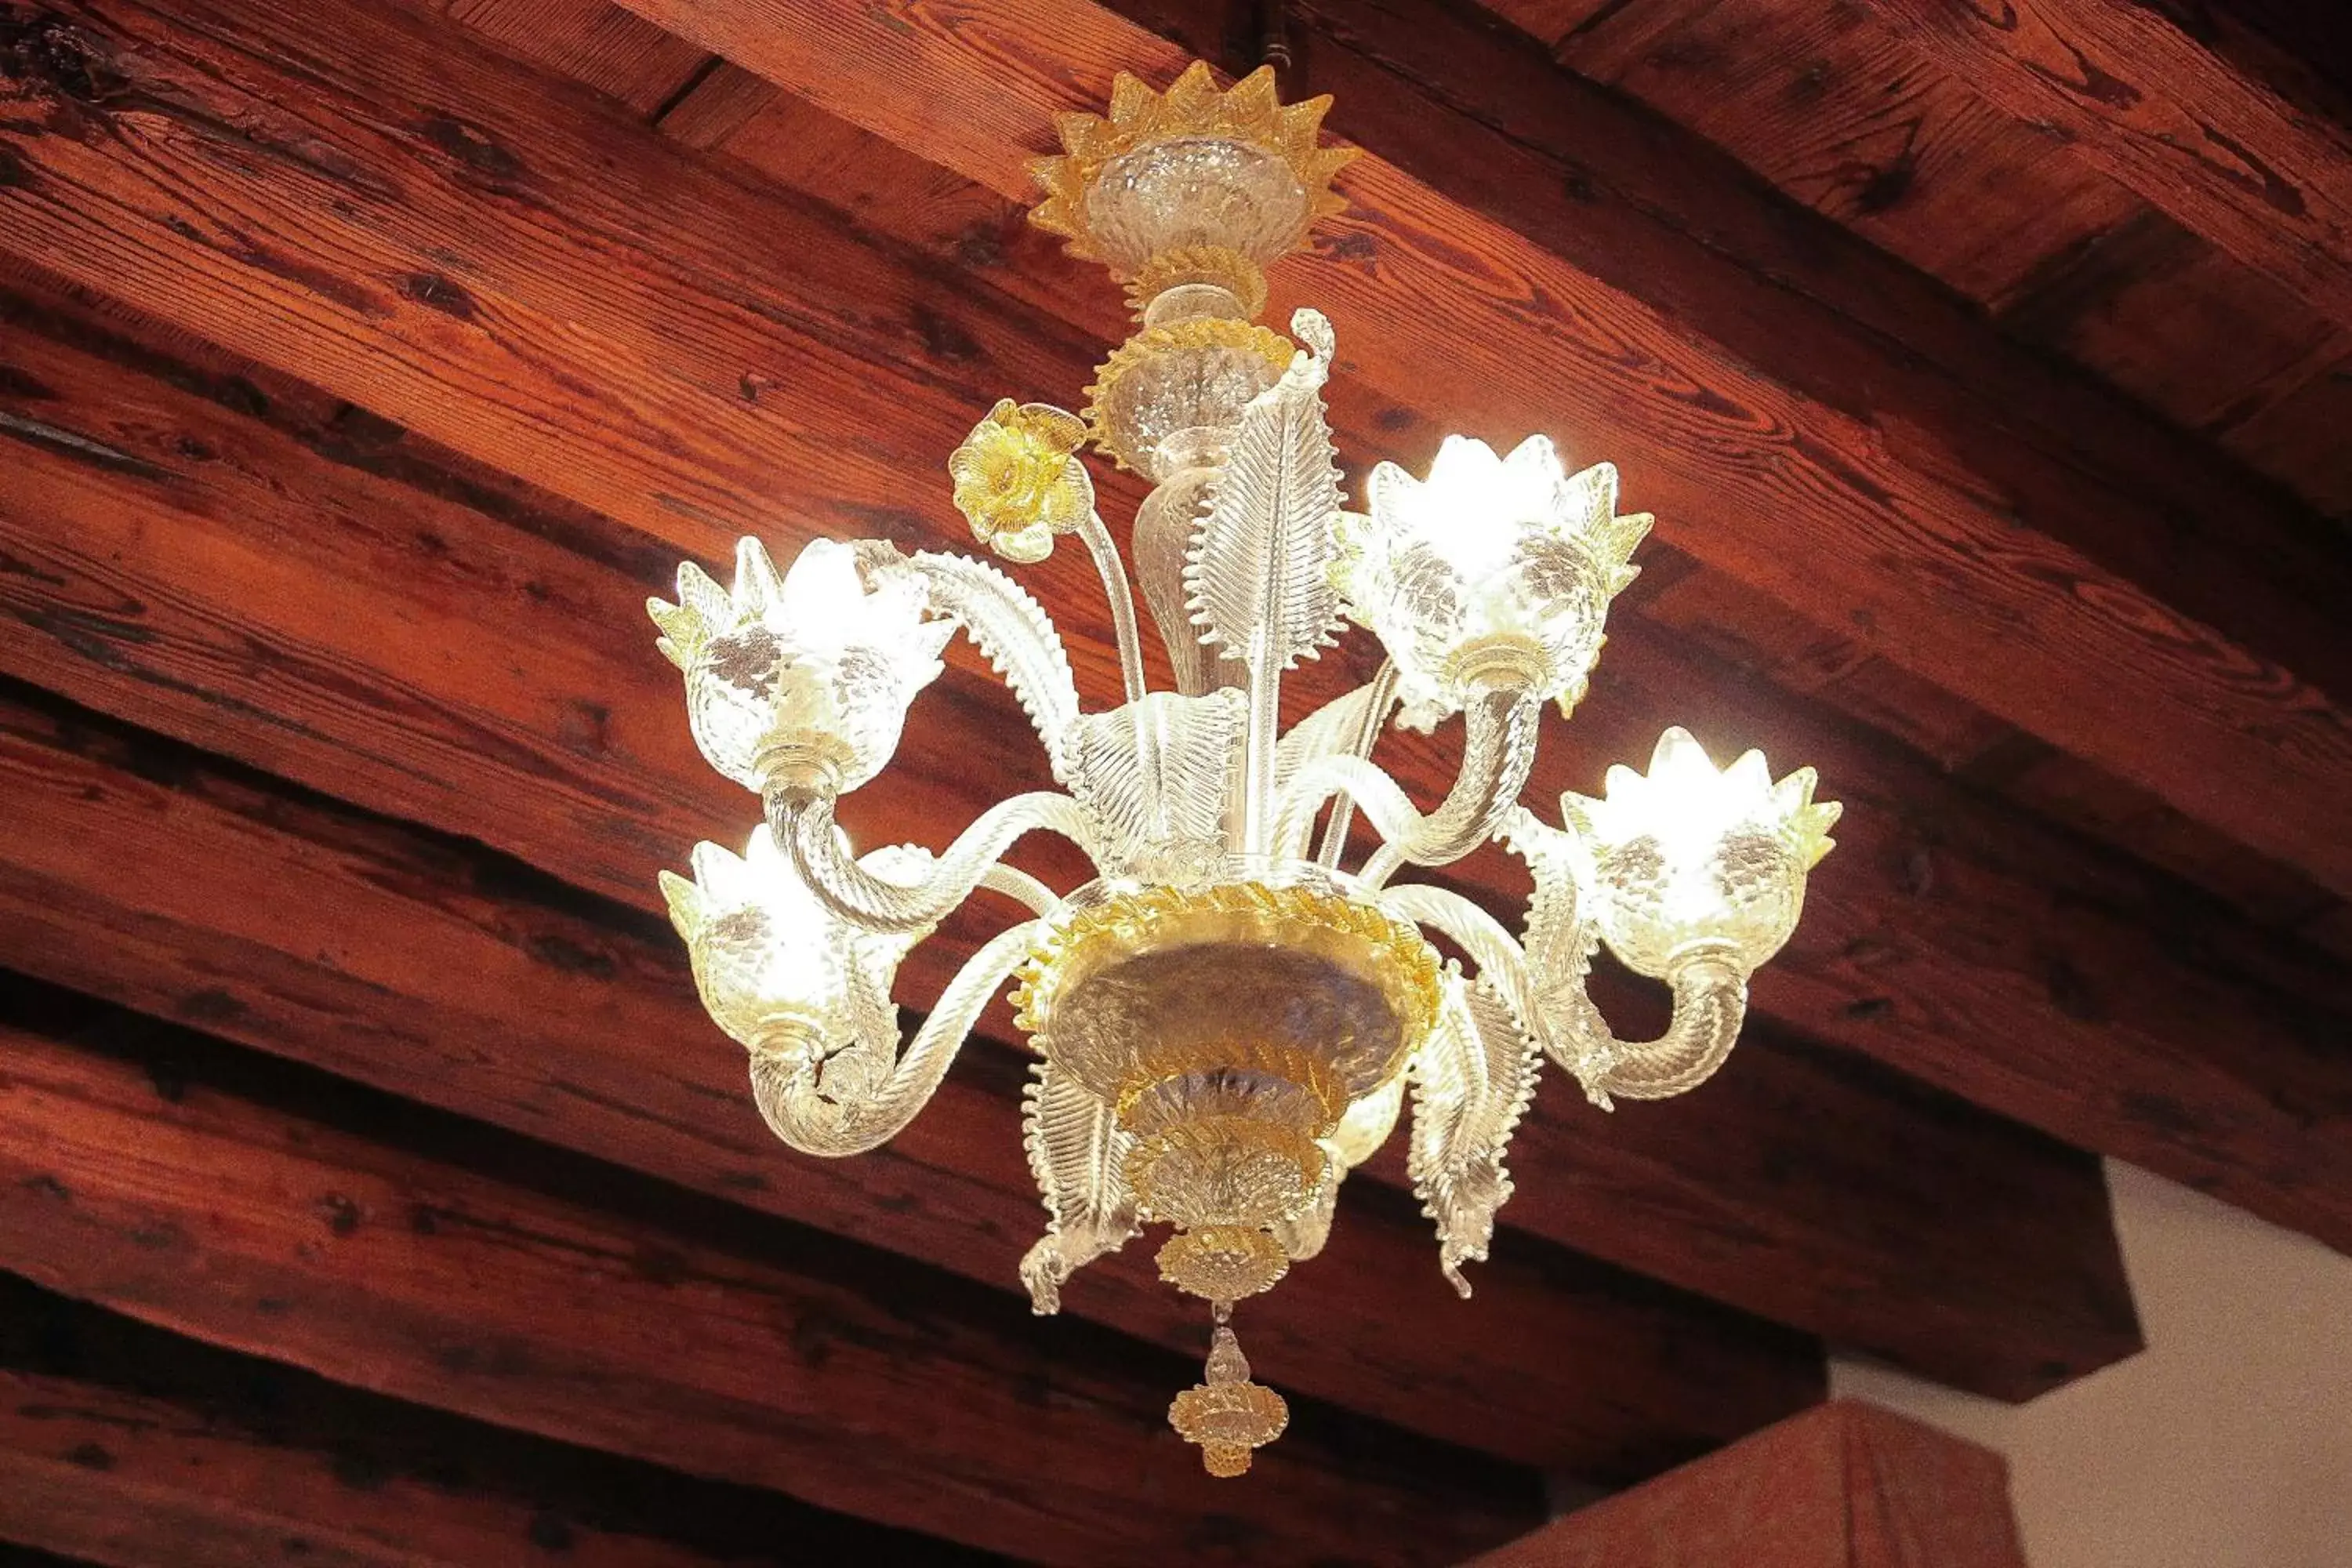 Decorative detail in Apostoli Palace